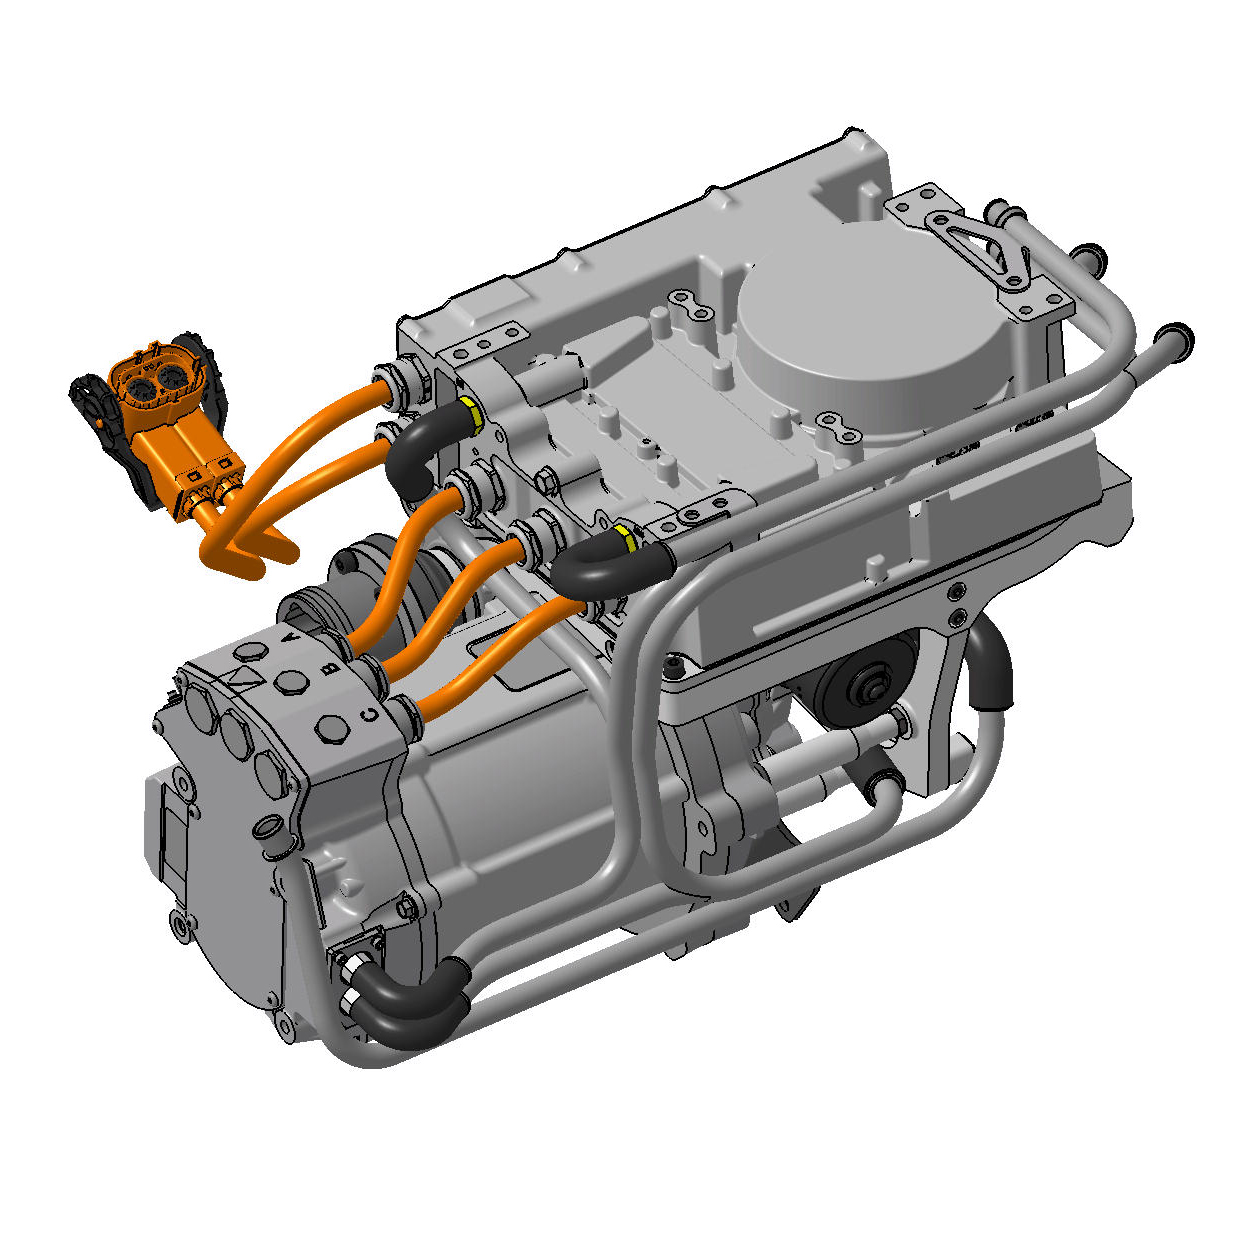 Swindon Powertrain’s High Power Density EV systemMachine tools world